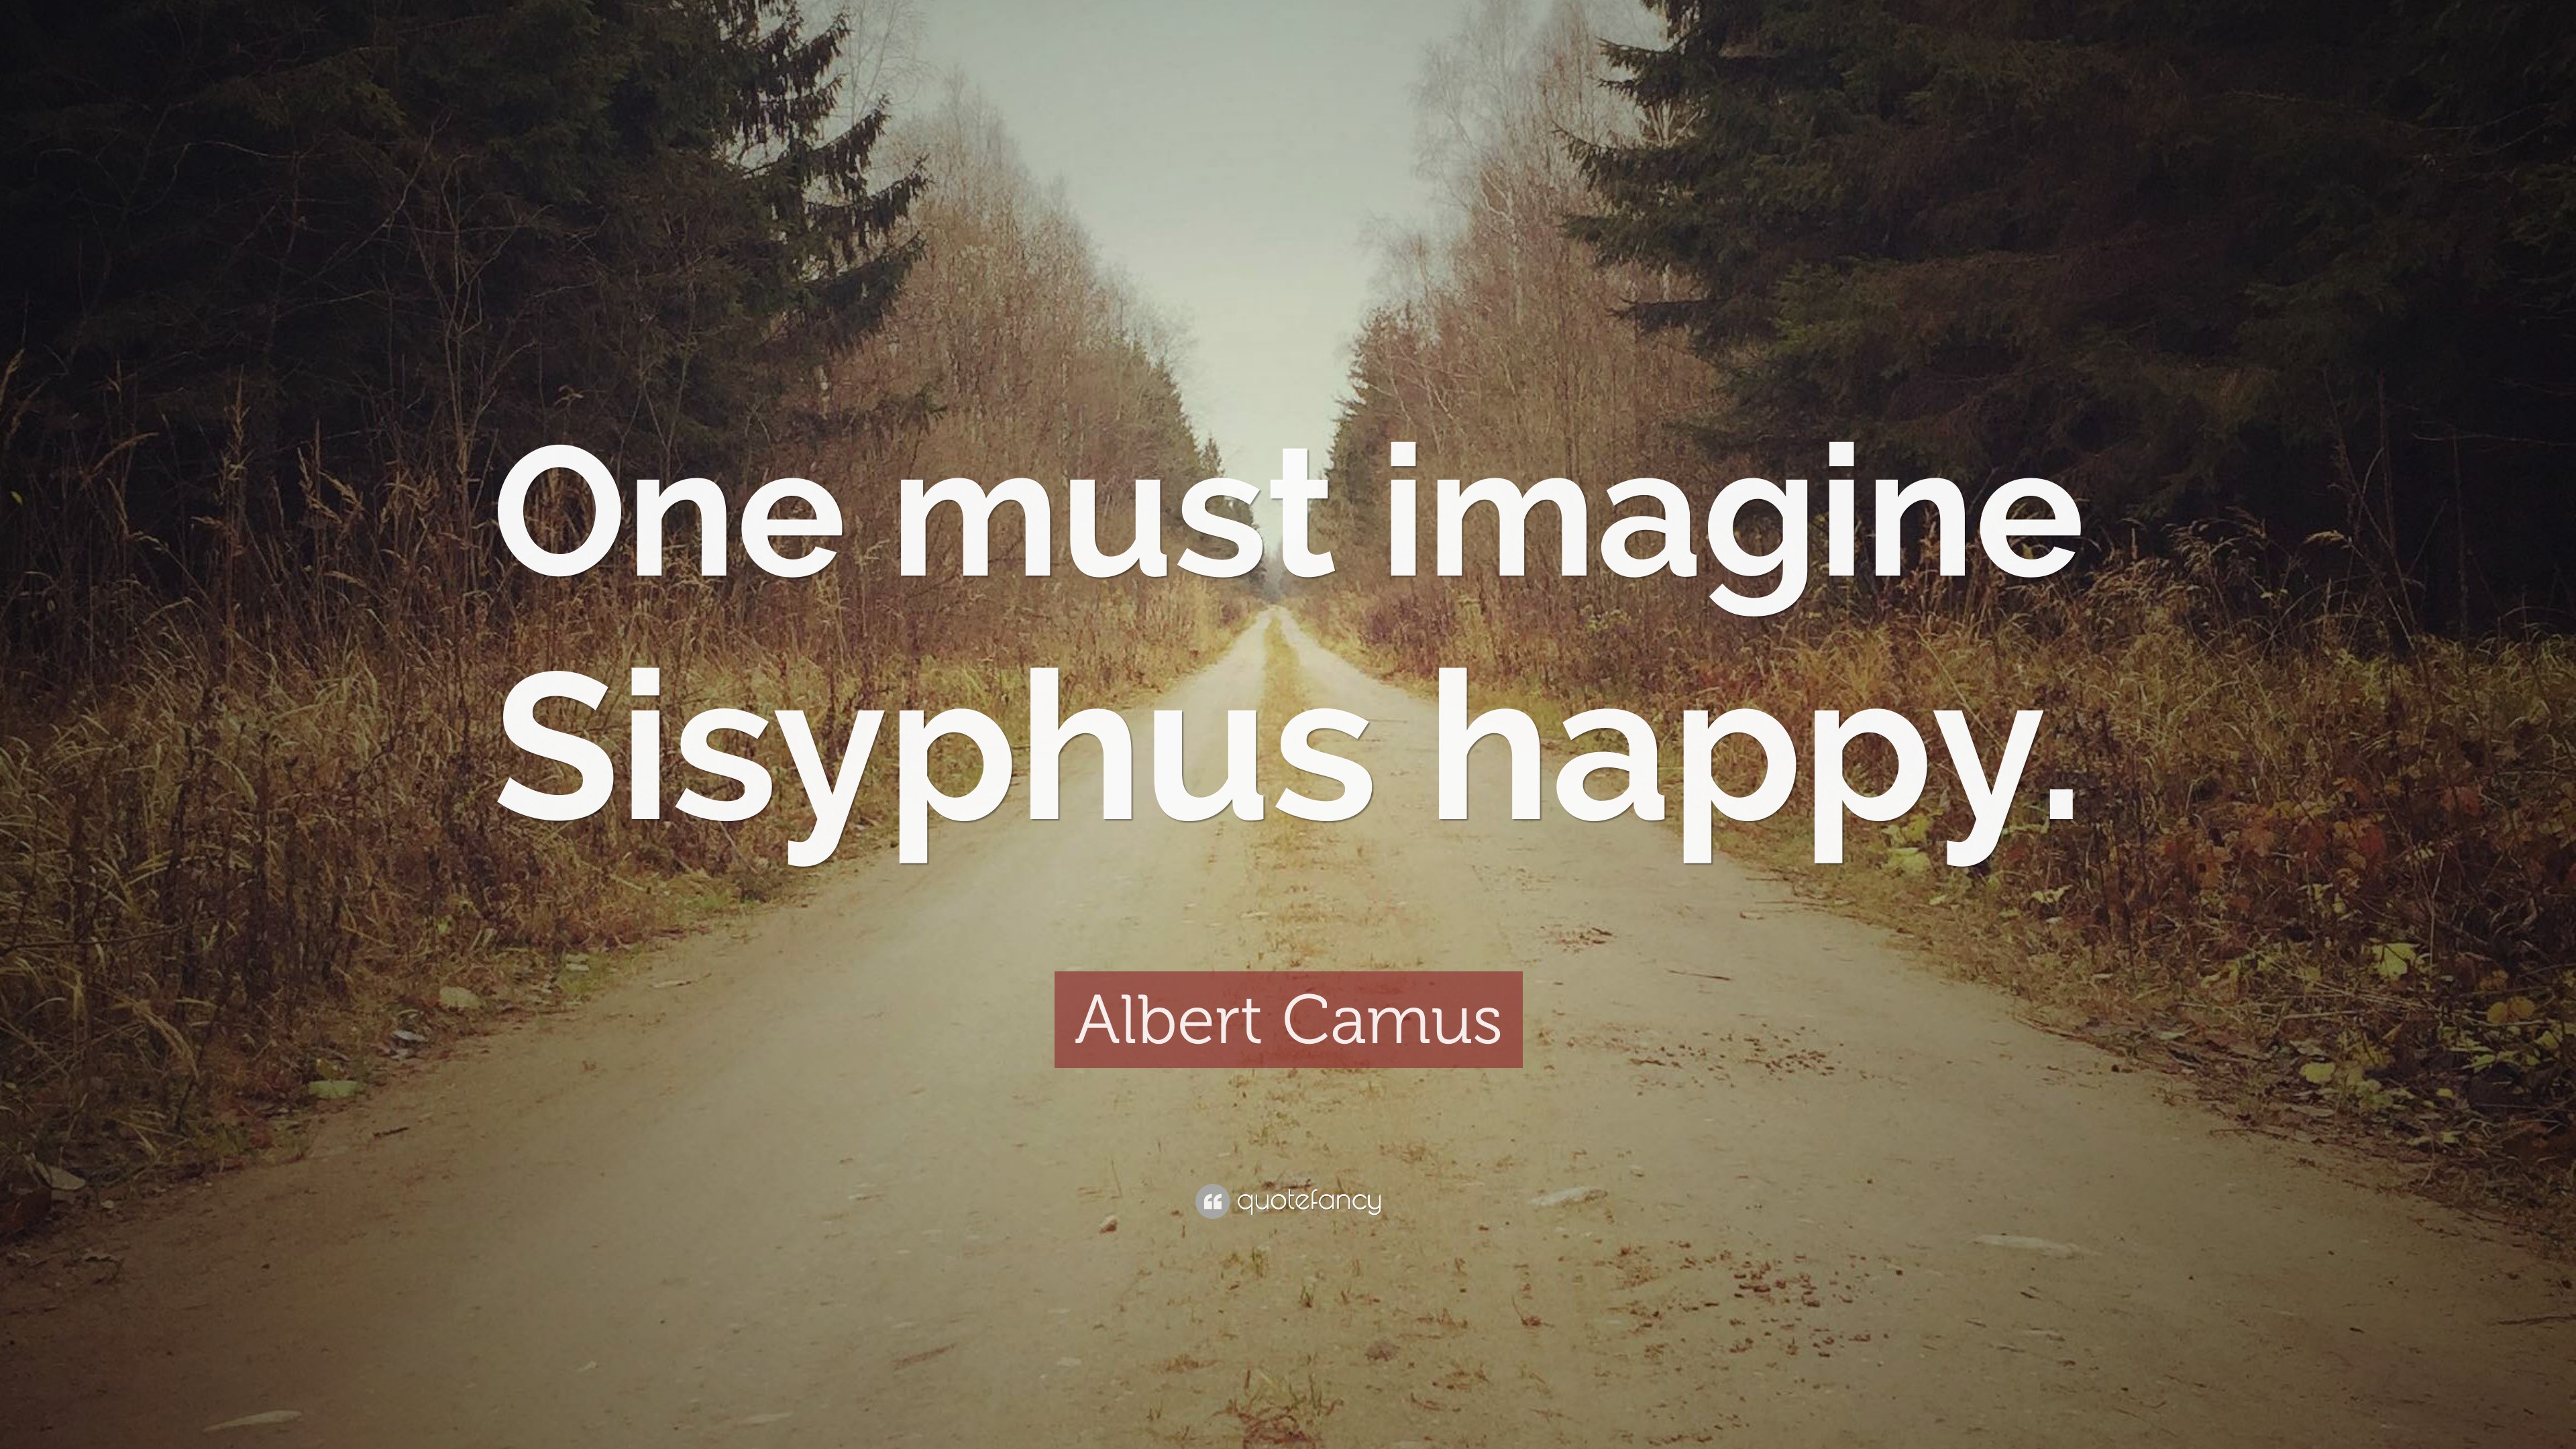 we must imagine sisyphus happy